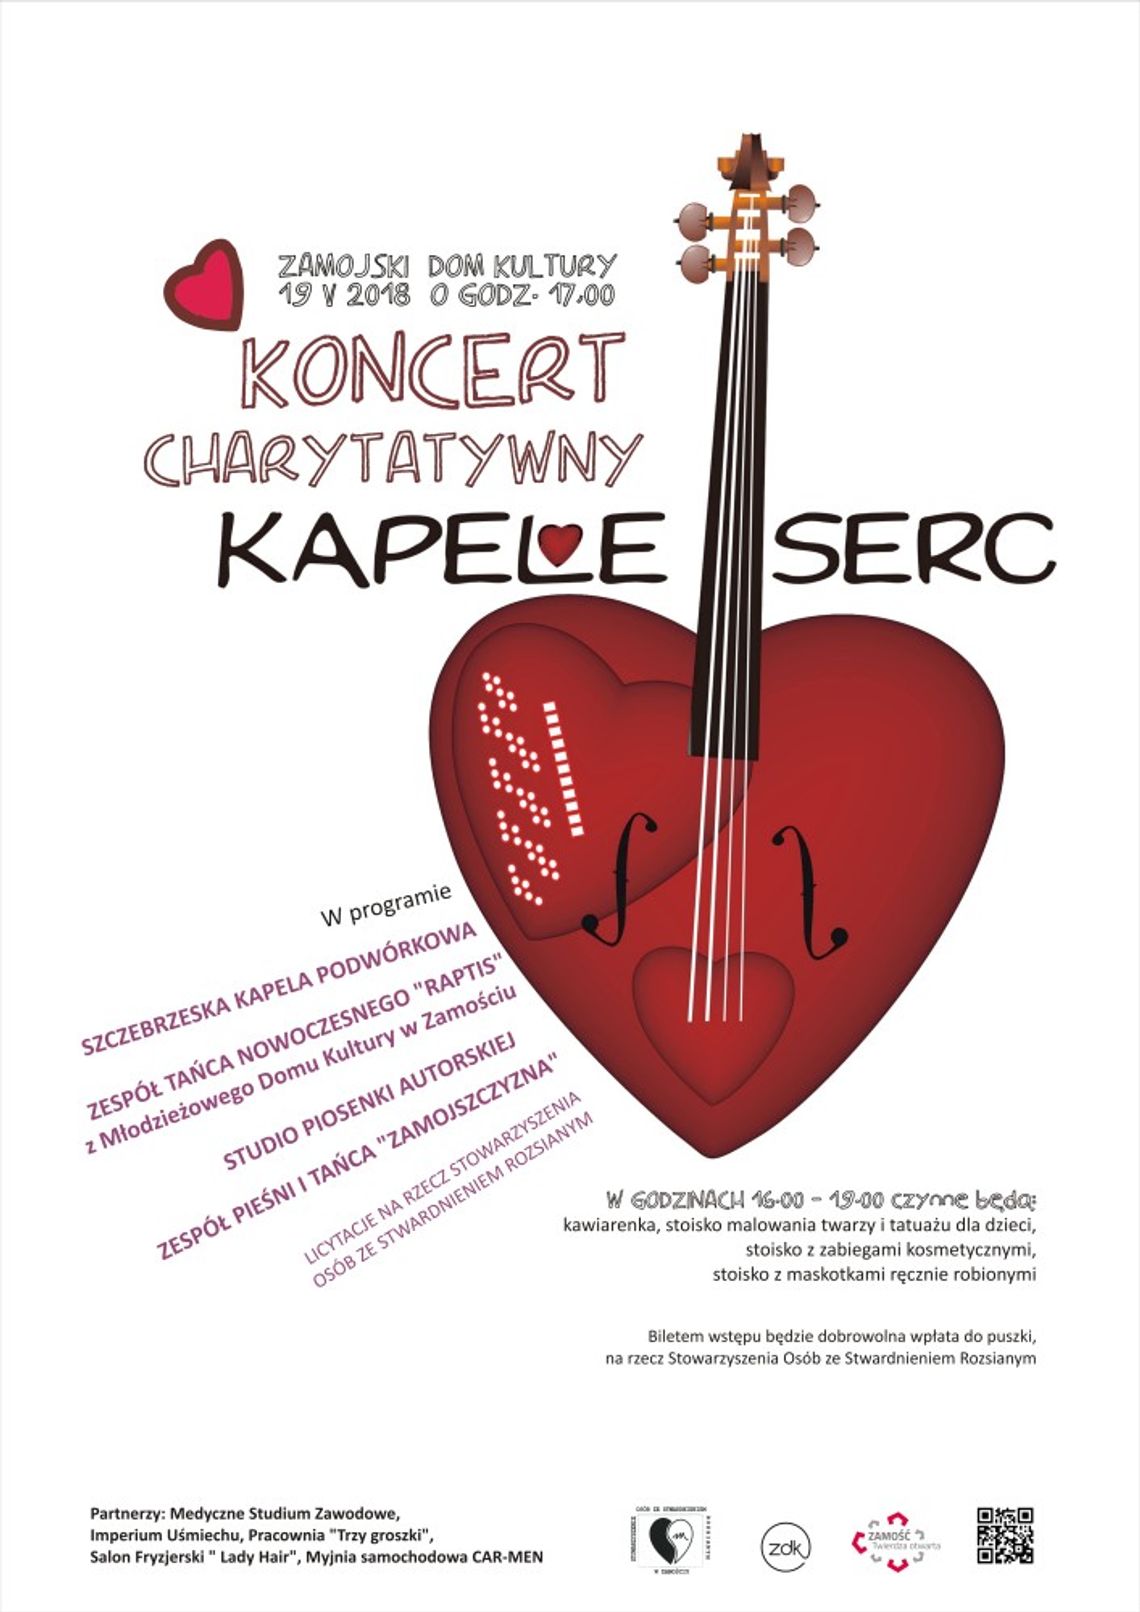 Zamość: Kapele serc - koncert w ZDK